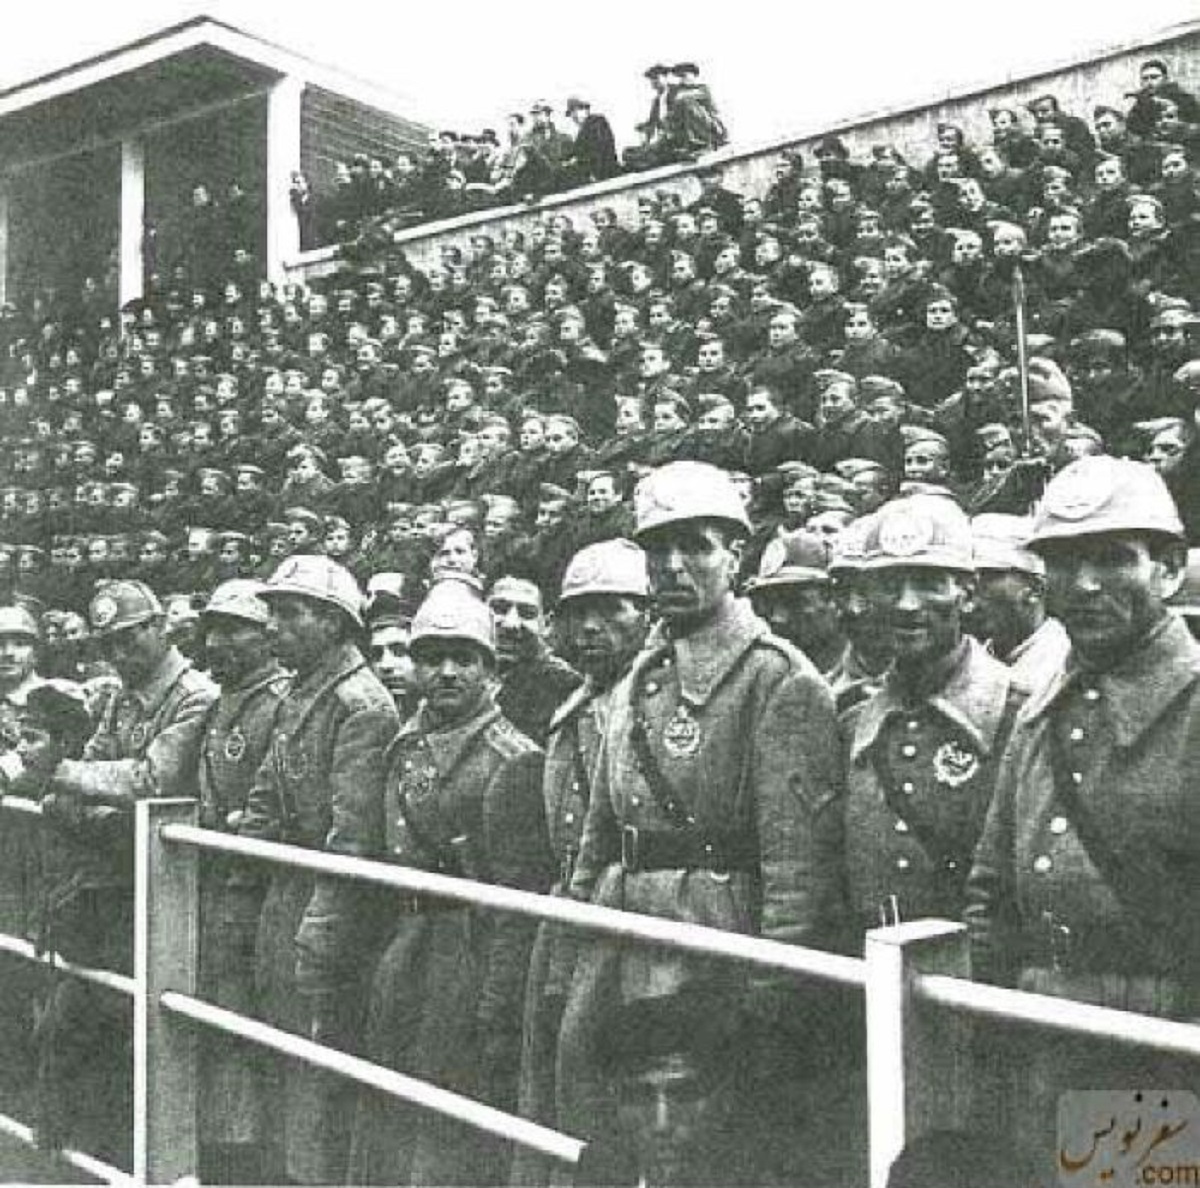 Iran-Poland football match 1943 in Tehran - Iran
Polish spectator platform